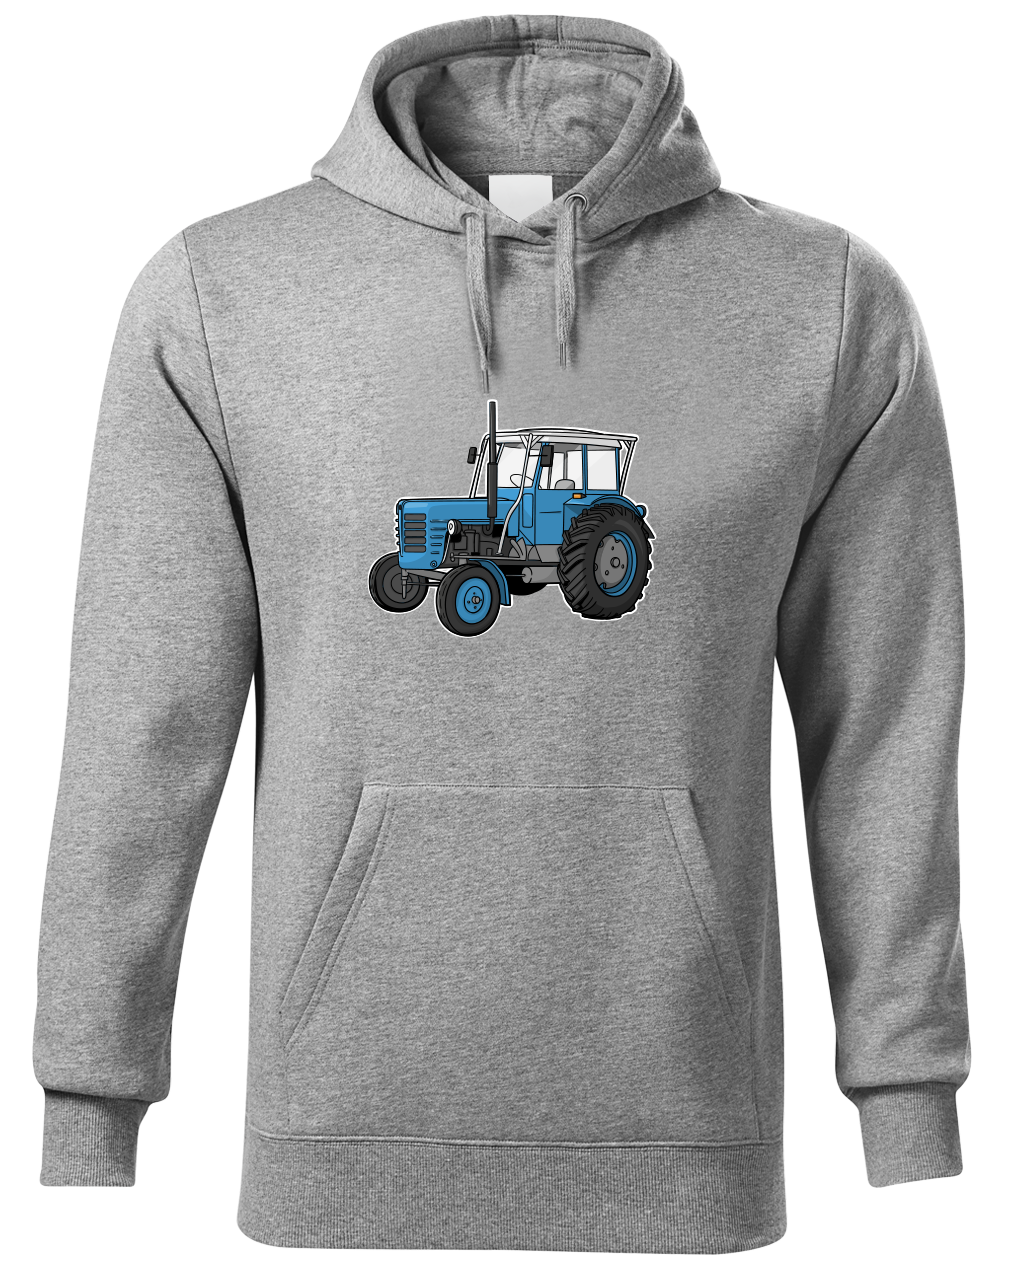 Mikina s traktorem - Starý traktor Velikost: M, Barva: Světle šedá